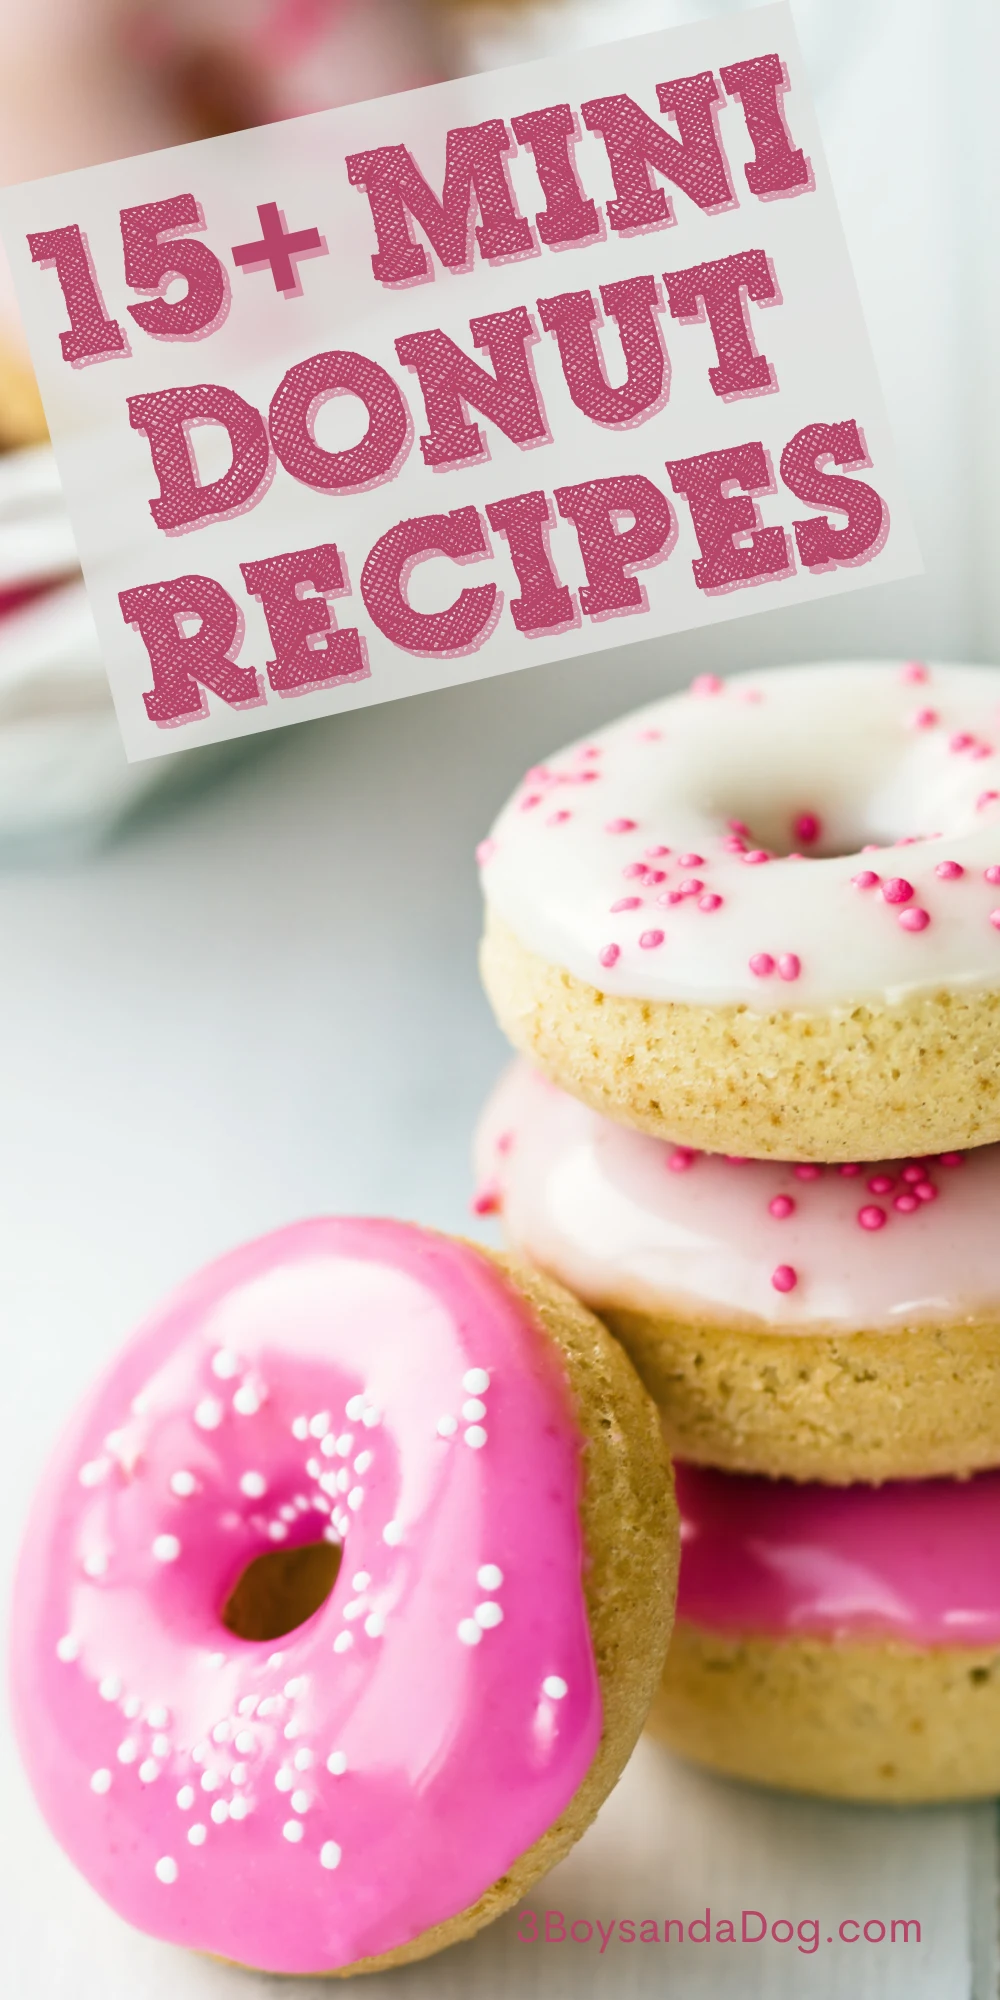 Perfect Mini Donut Maker Recipes